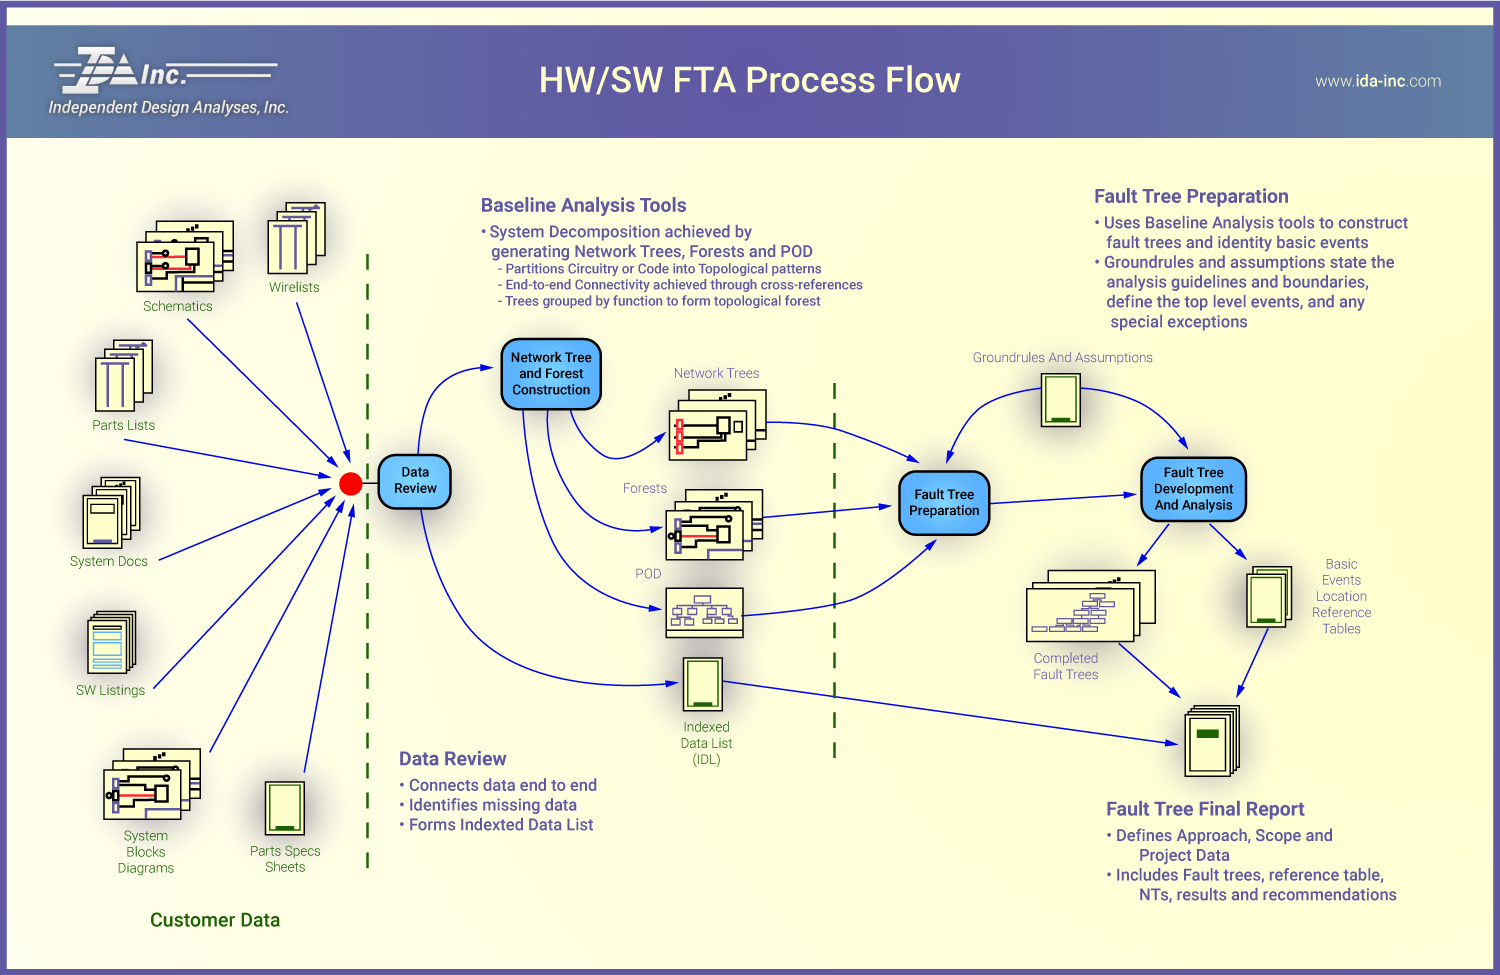 Hardware Software Fault Tree Analysis Process Flow - IDA Inc